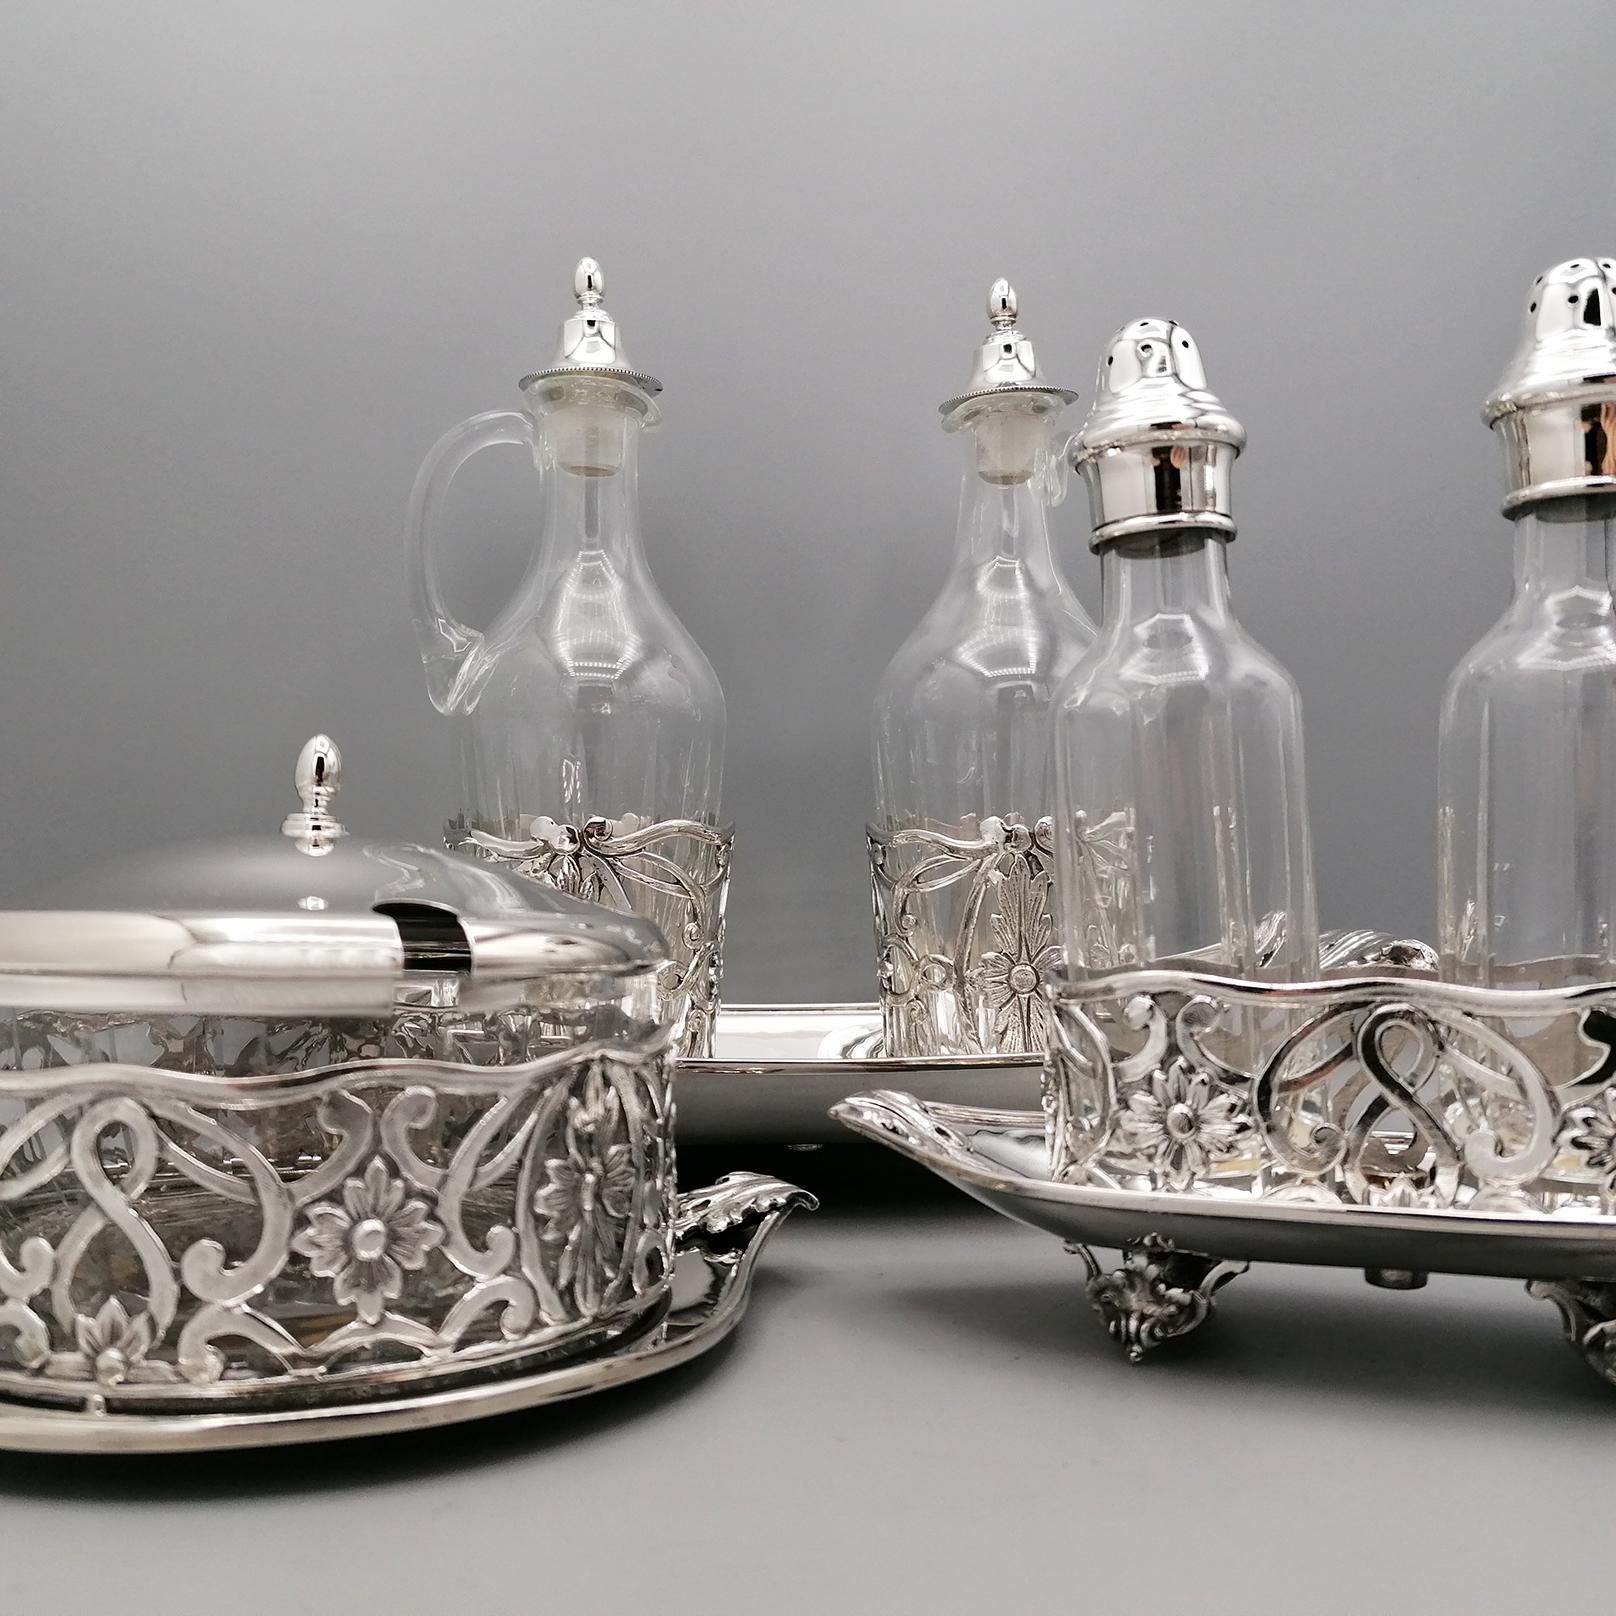 Hand-Crafted 20th Century Italian Art Nouveau - Liberty replica Sterling Silver - Cruet Set  For Sale